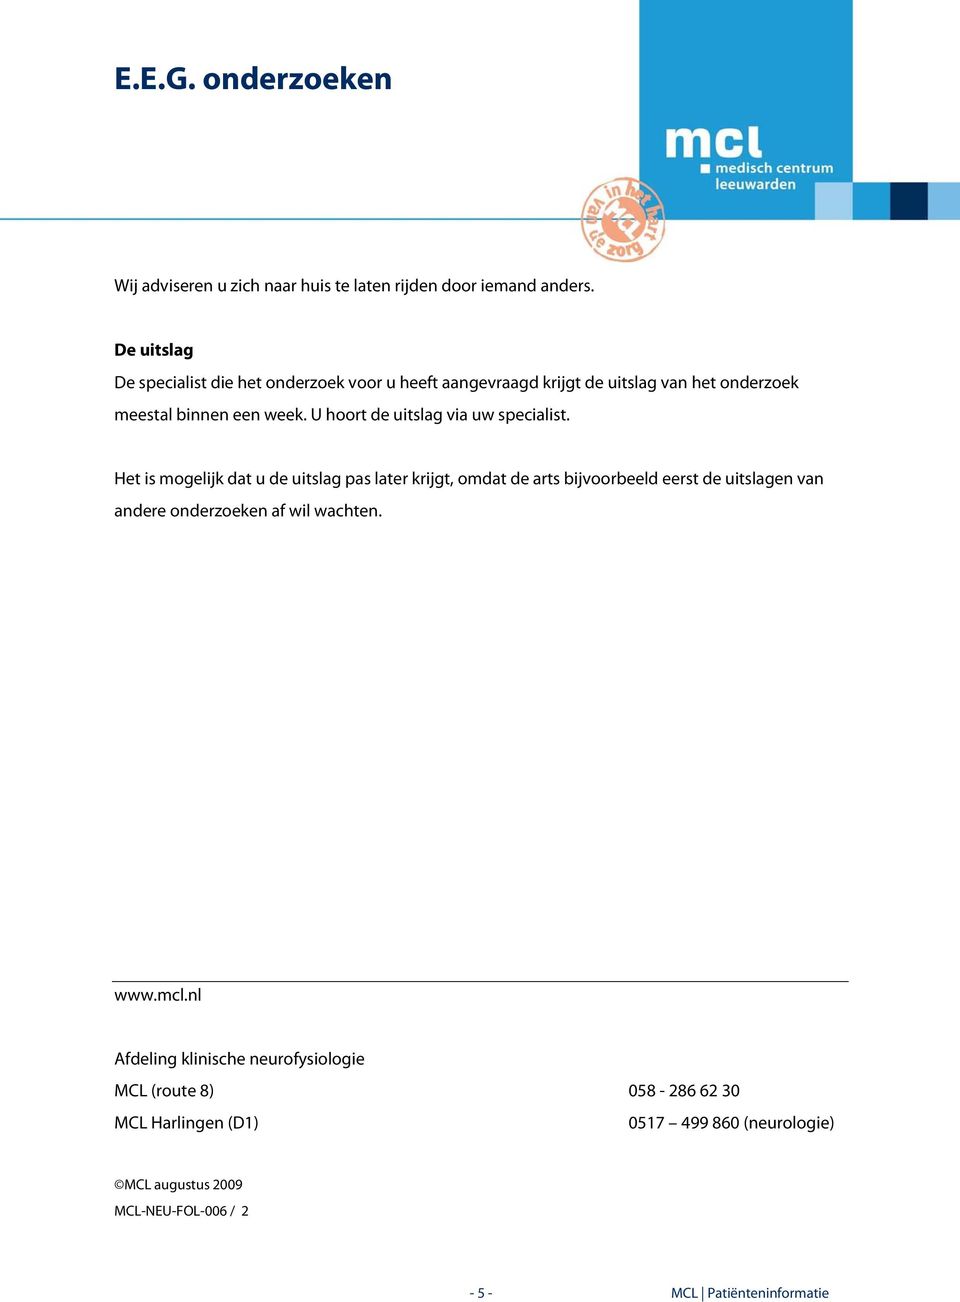 nl Afdeling klinische neurofysiologie MCL (route 8) 058-286 62